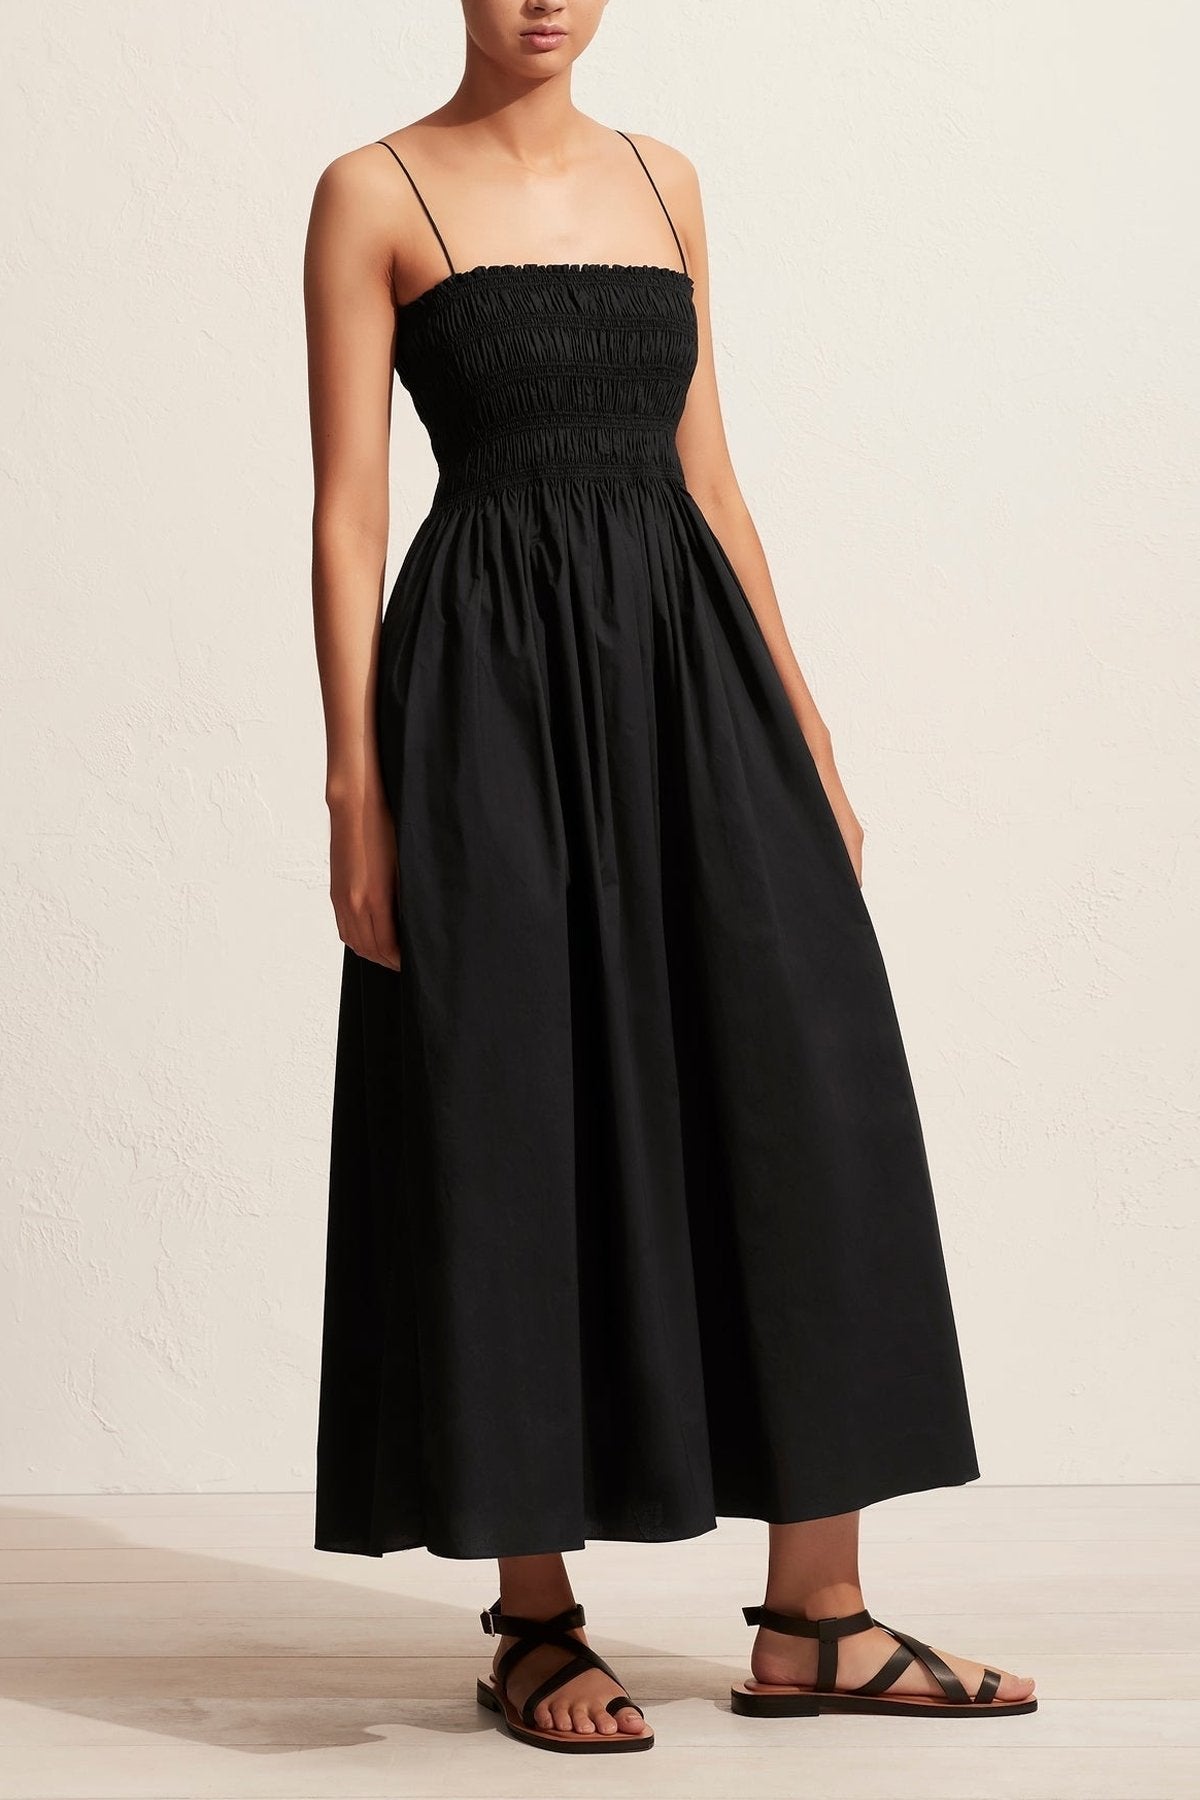 Shirred Bodice Dress in Black - shop-olivia.com